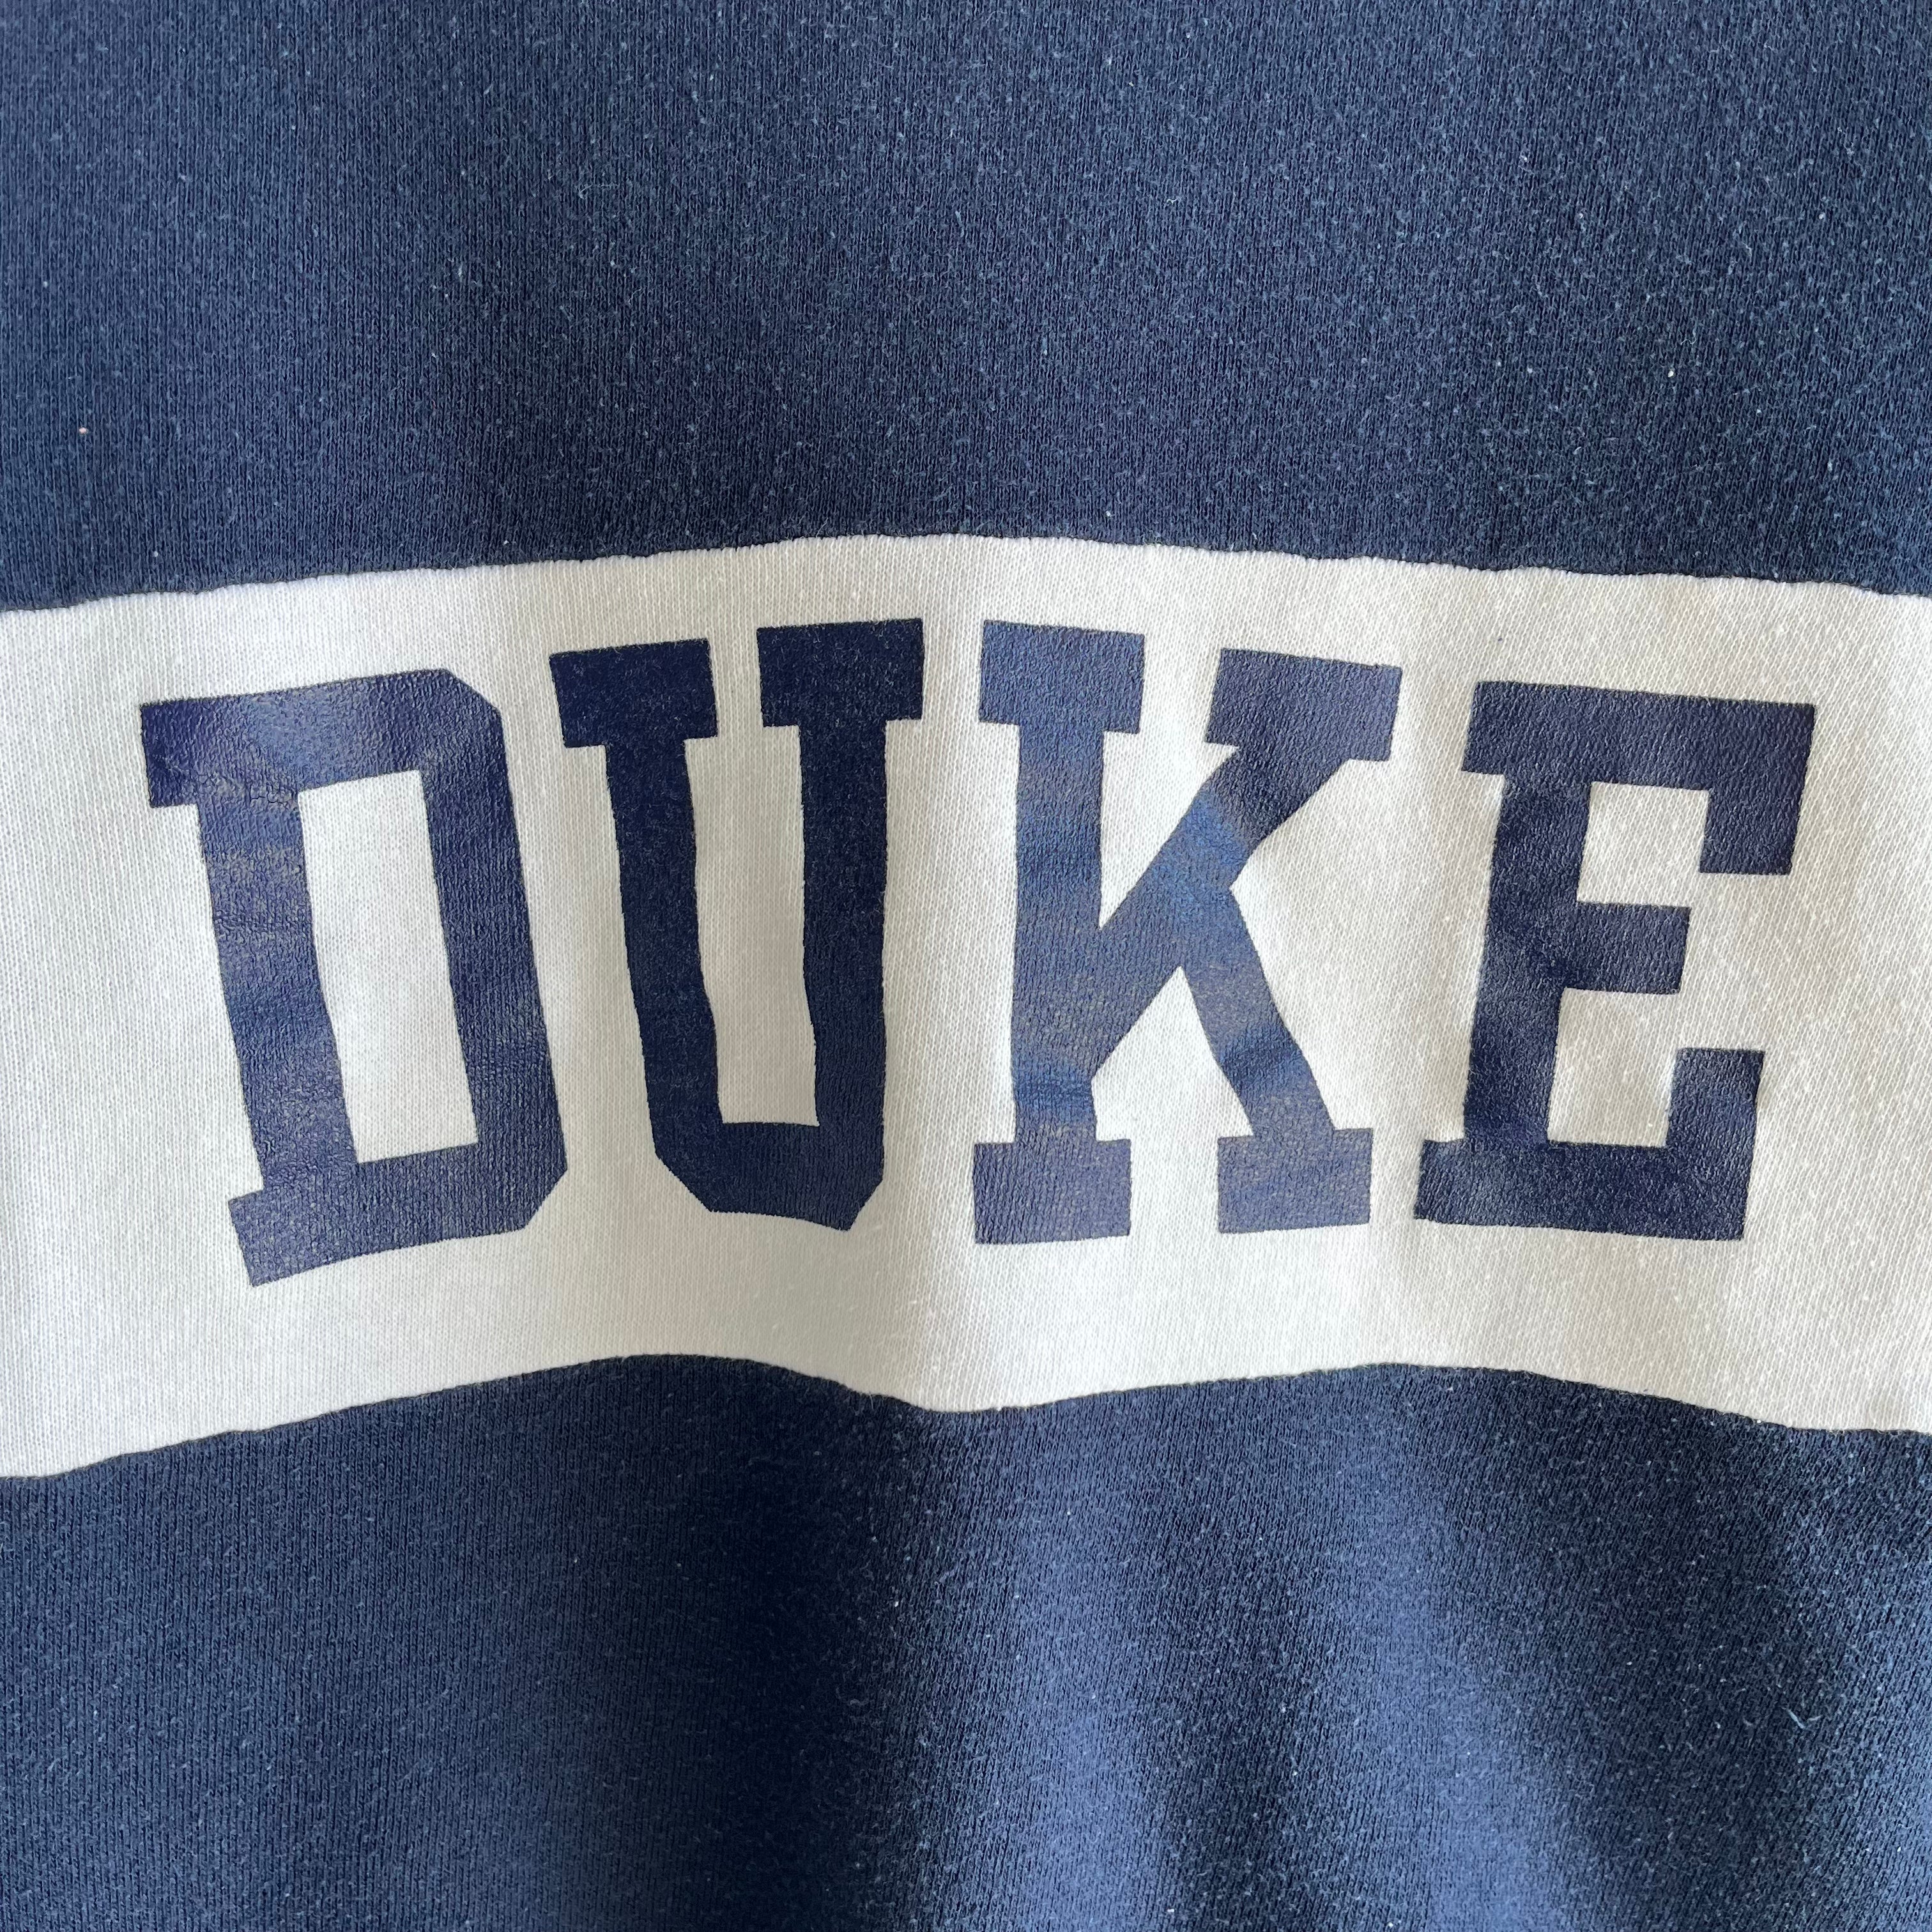 1980s Duke University Color Block Sweatshirt by Velva Sheen !!!